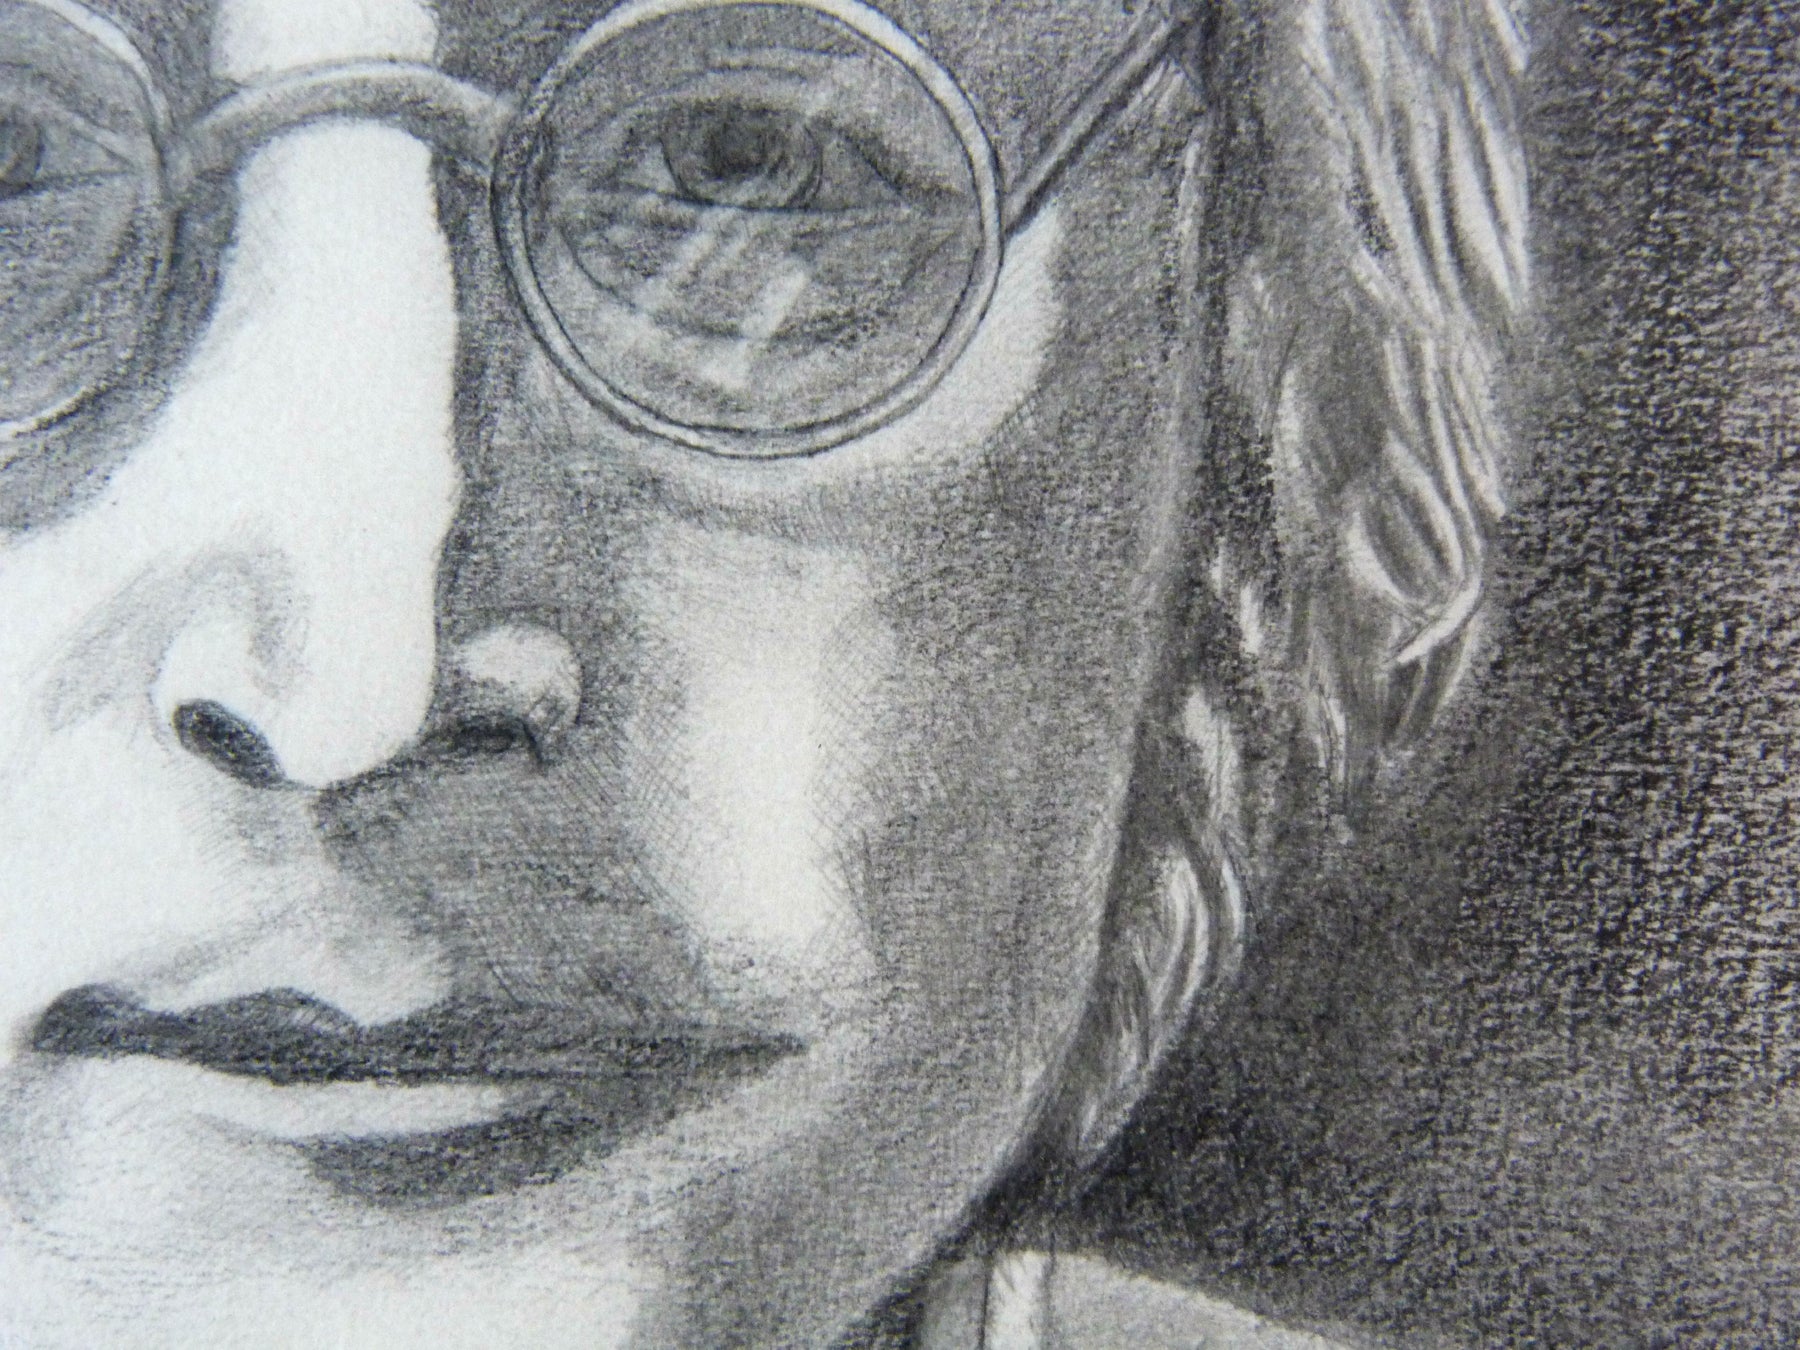  John Lennon Pencil Drawing Print - Limited Edition 